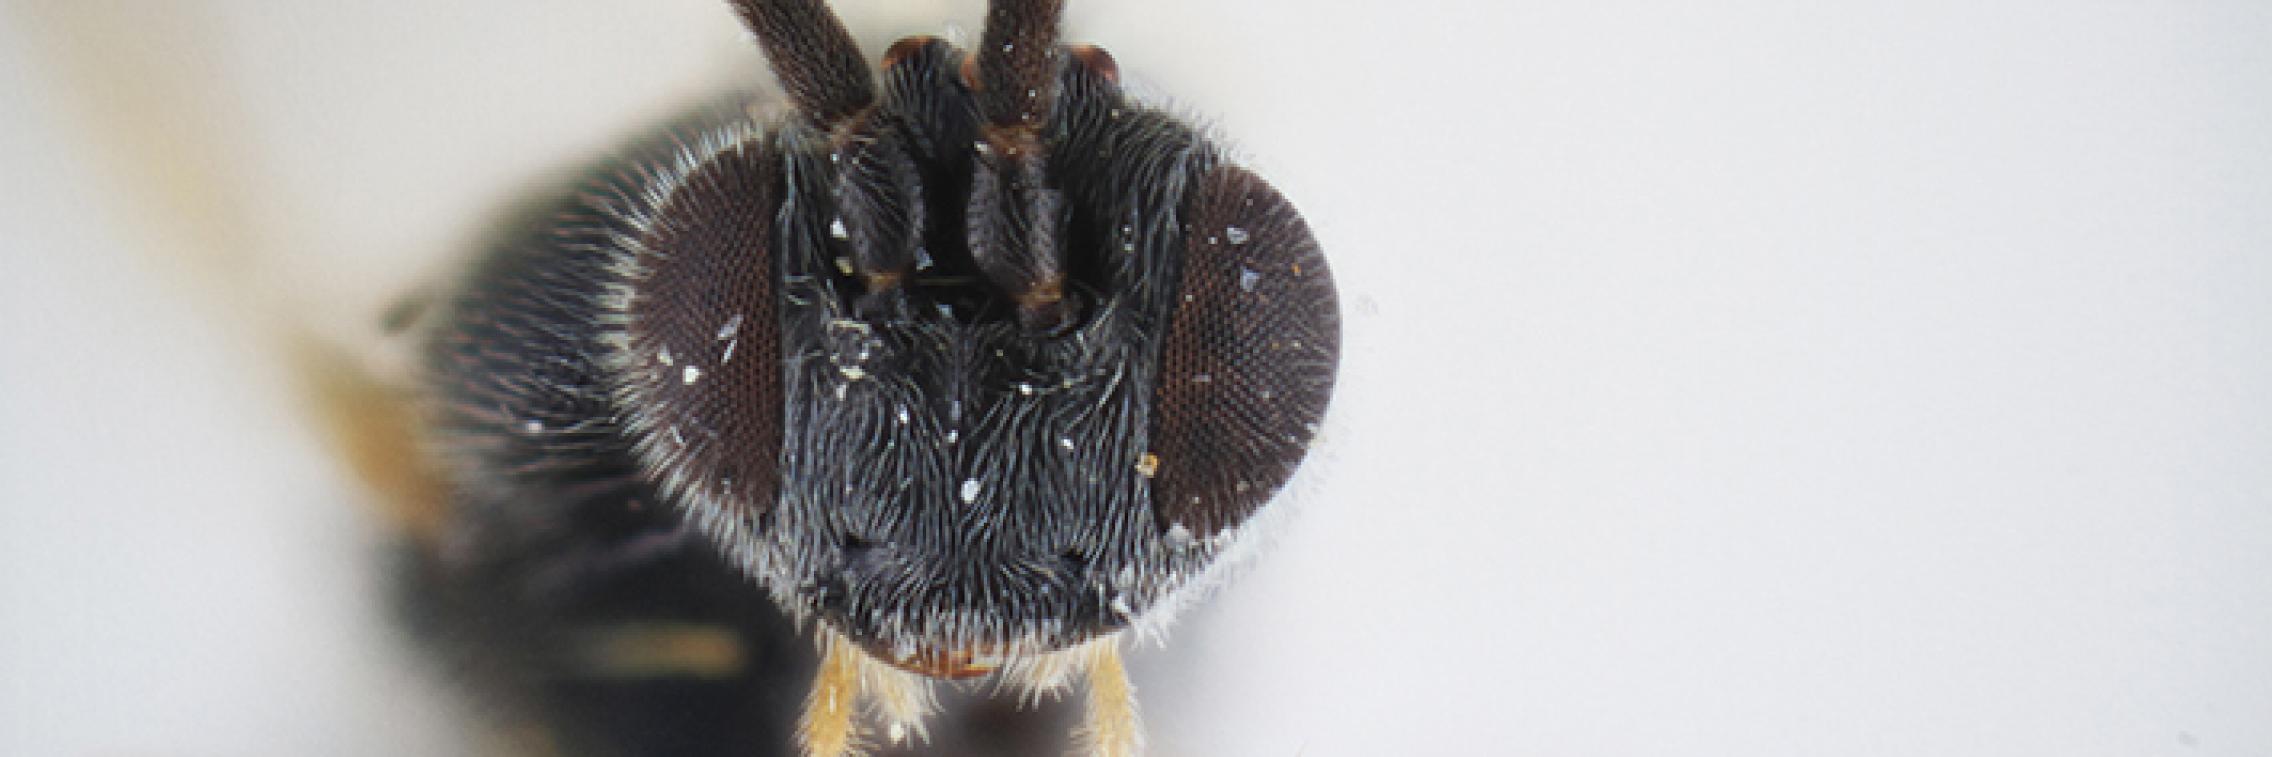 Dolichogenidea xenomorph wasp